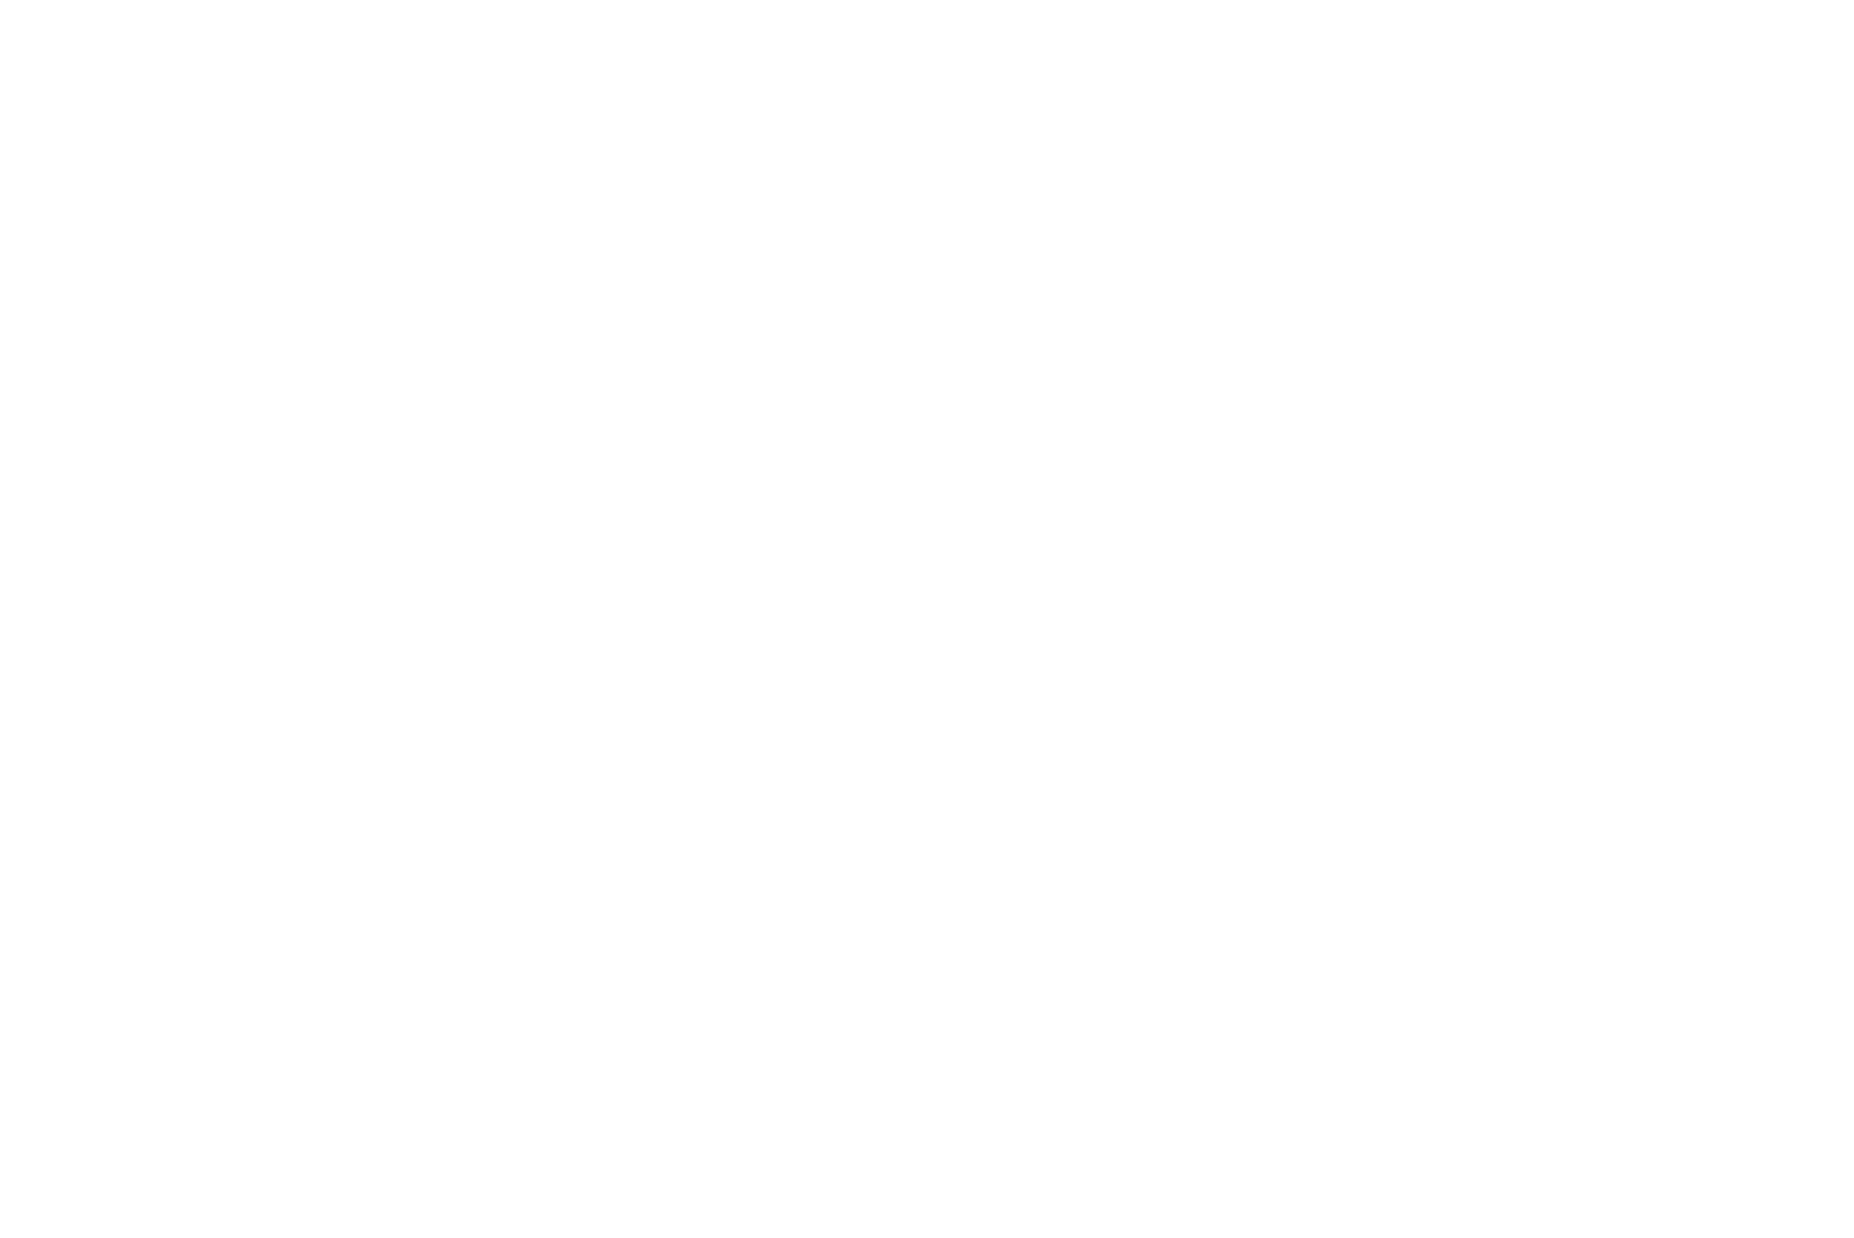 Alon's Pickles